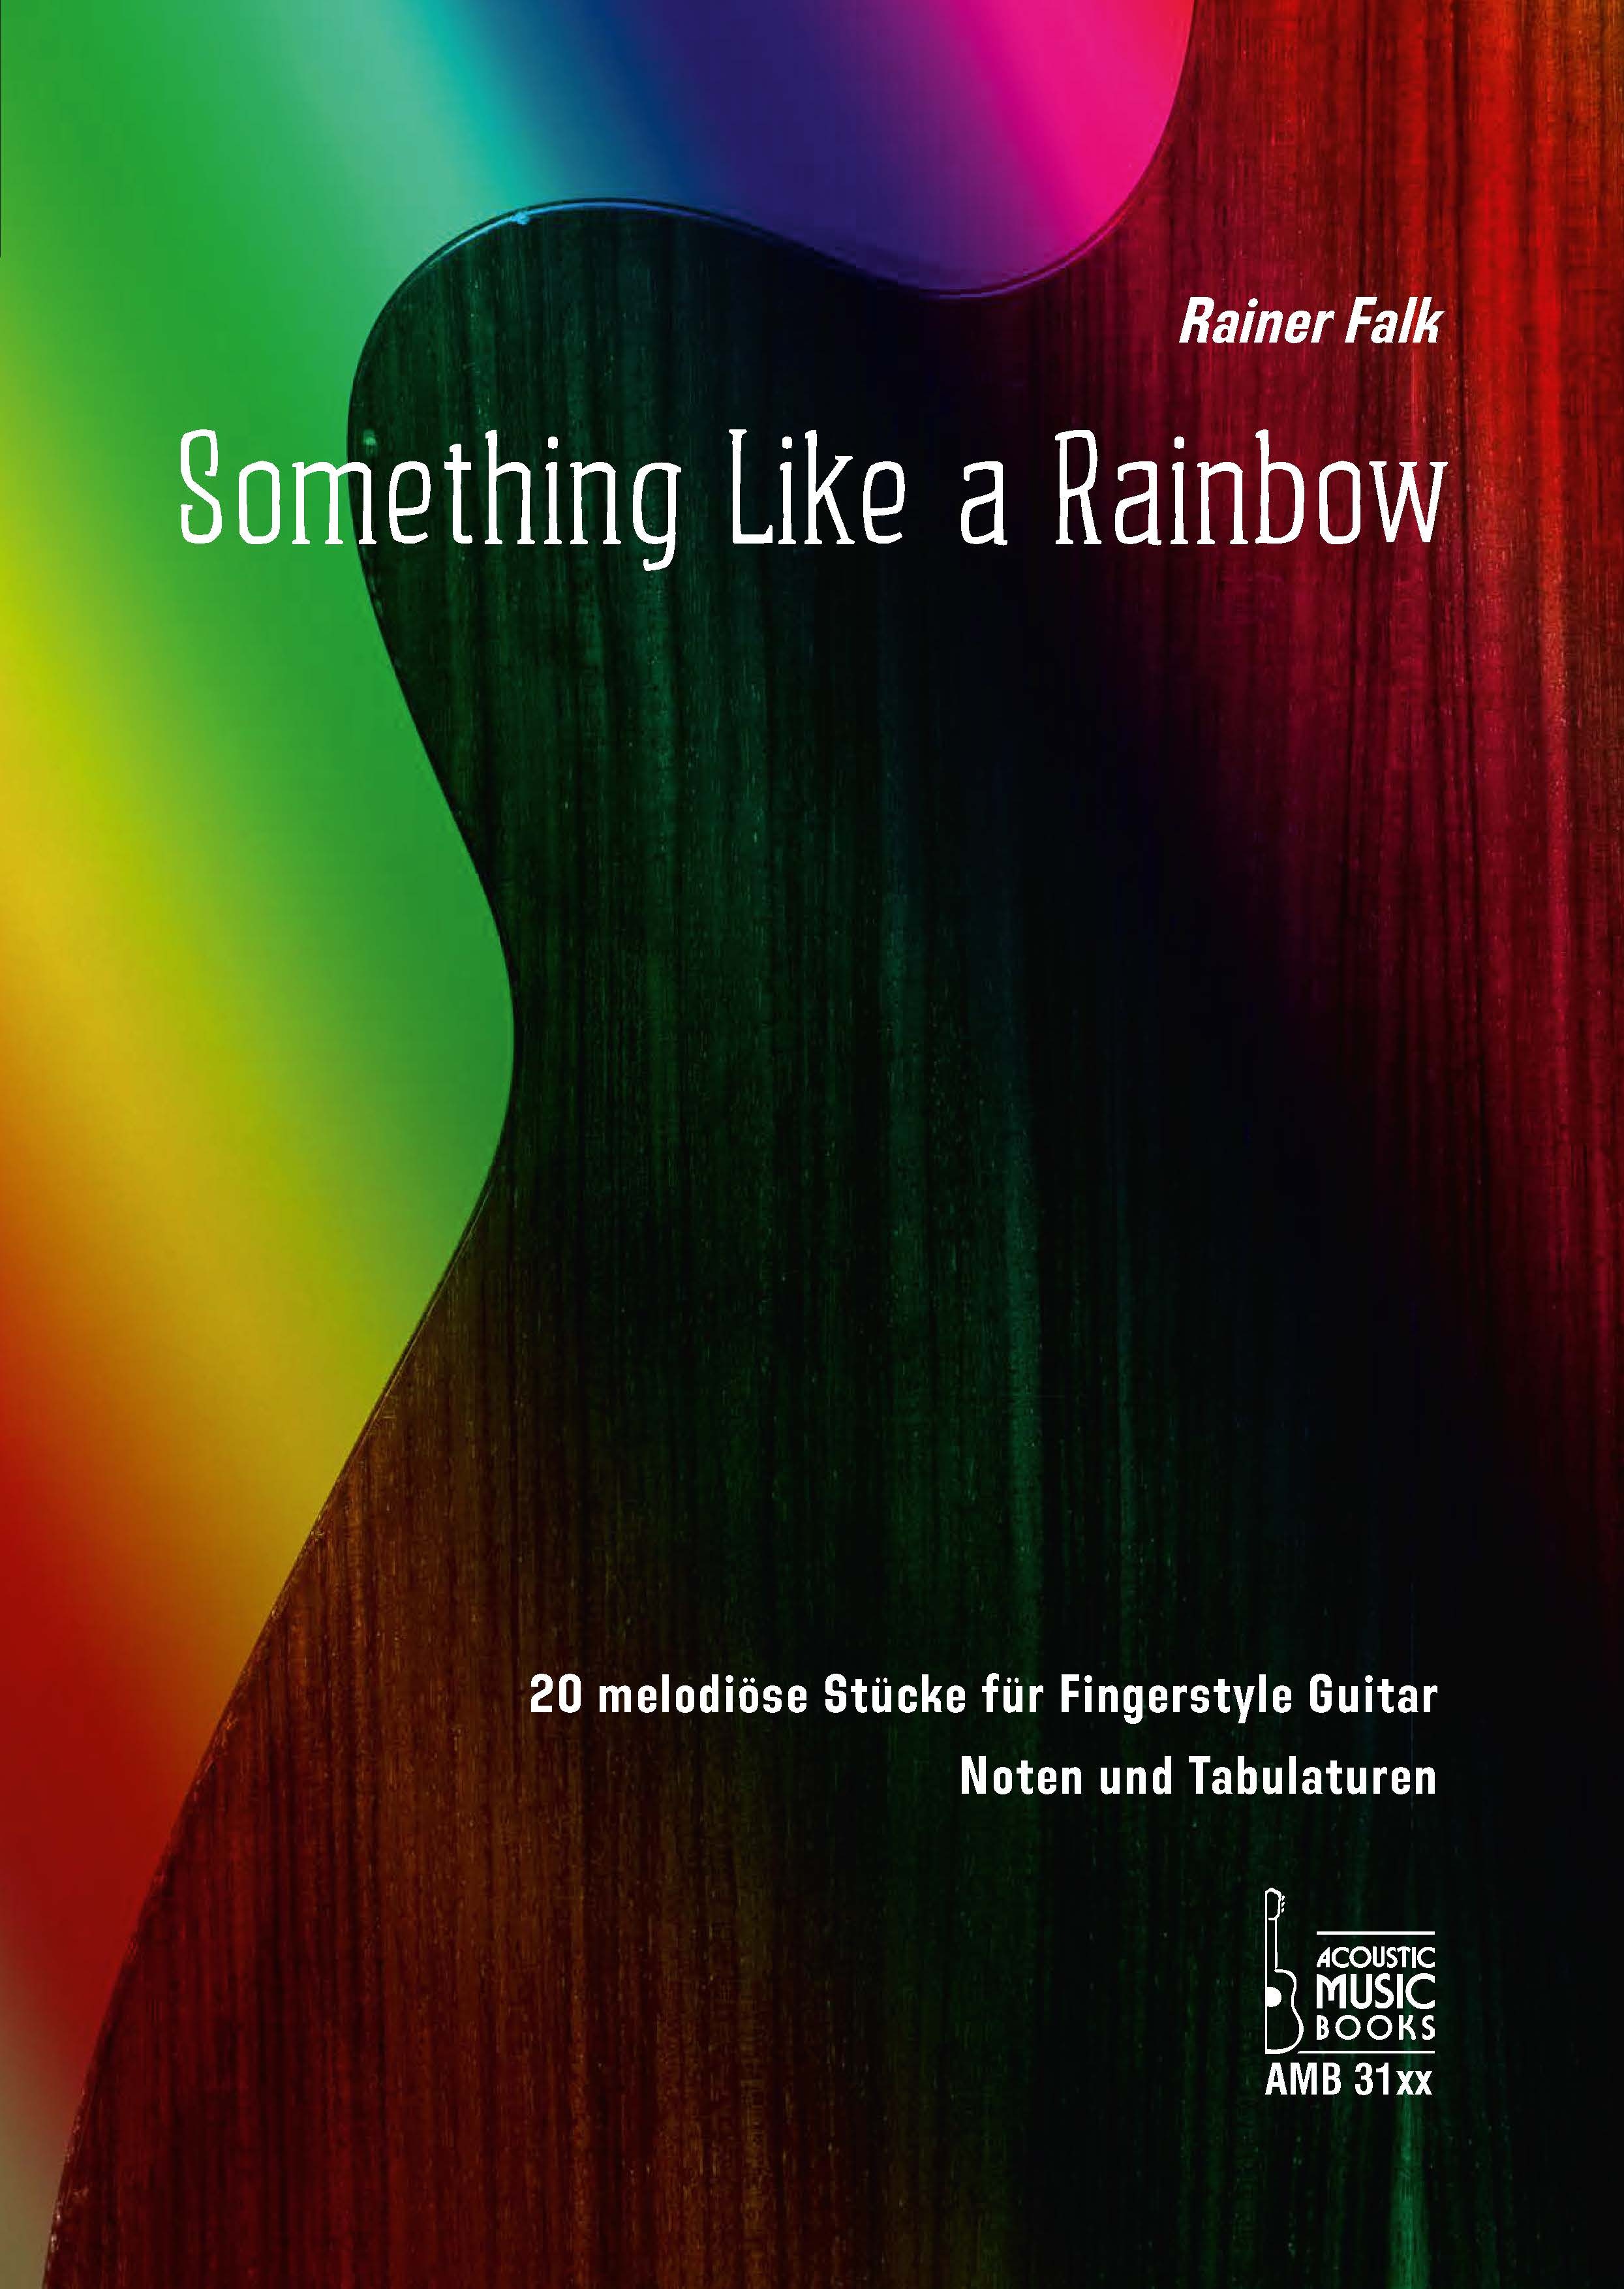 Rainer_Falk_-_Something_Like_a_Rainbow_2_klein